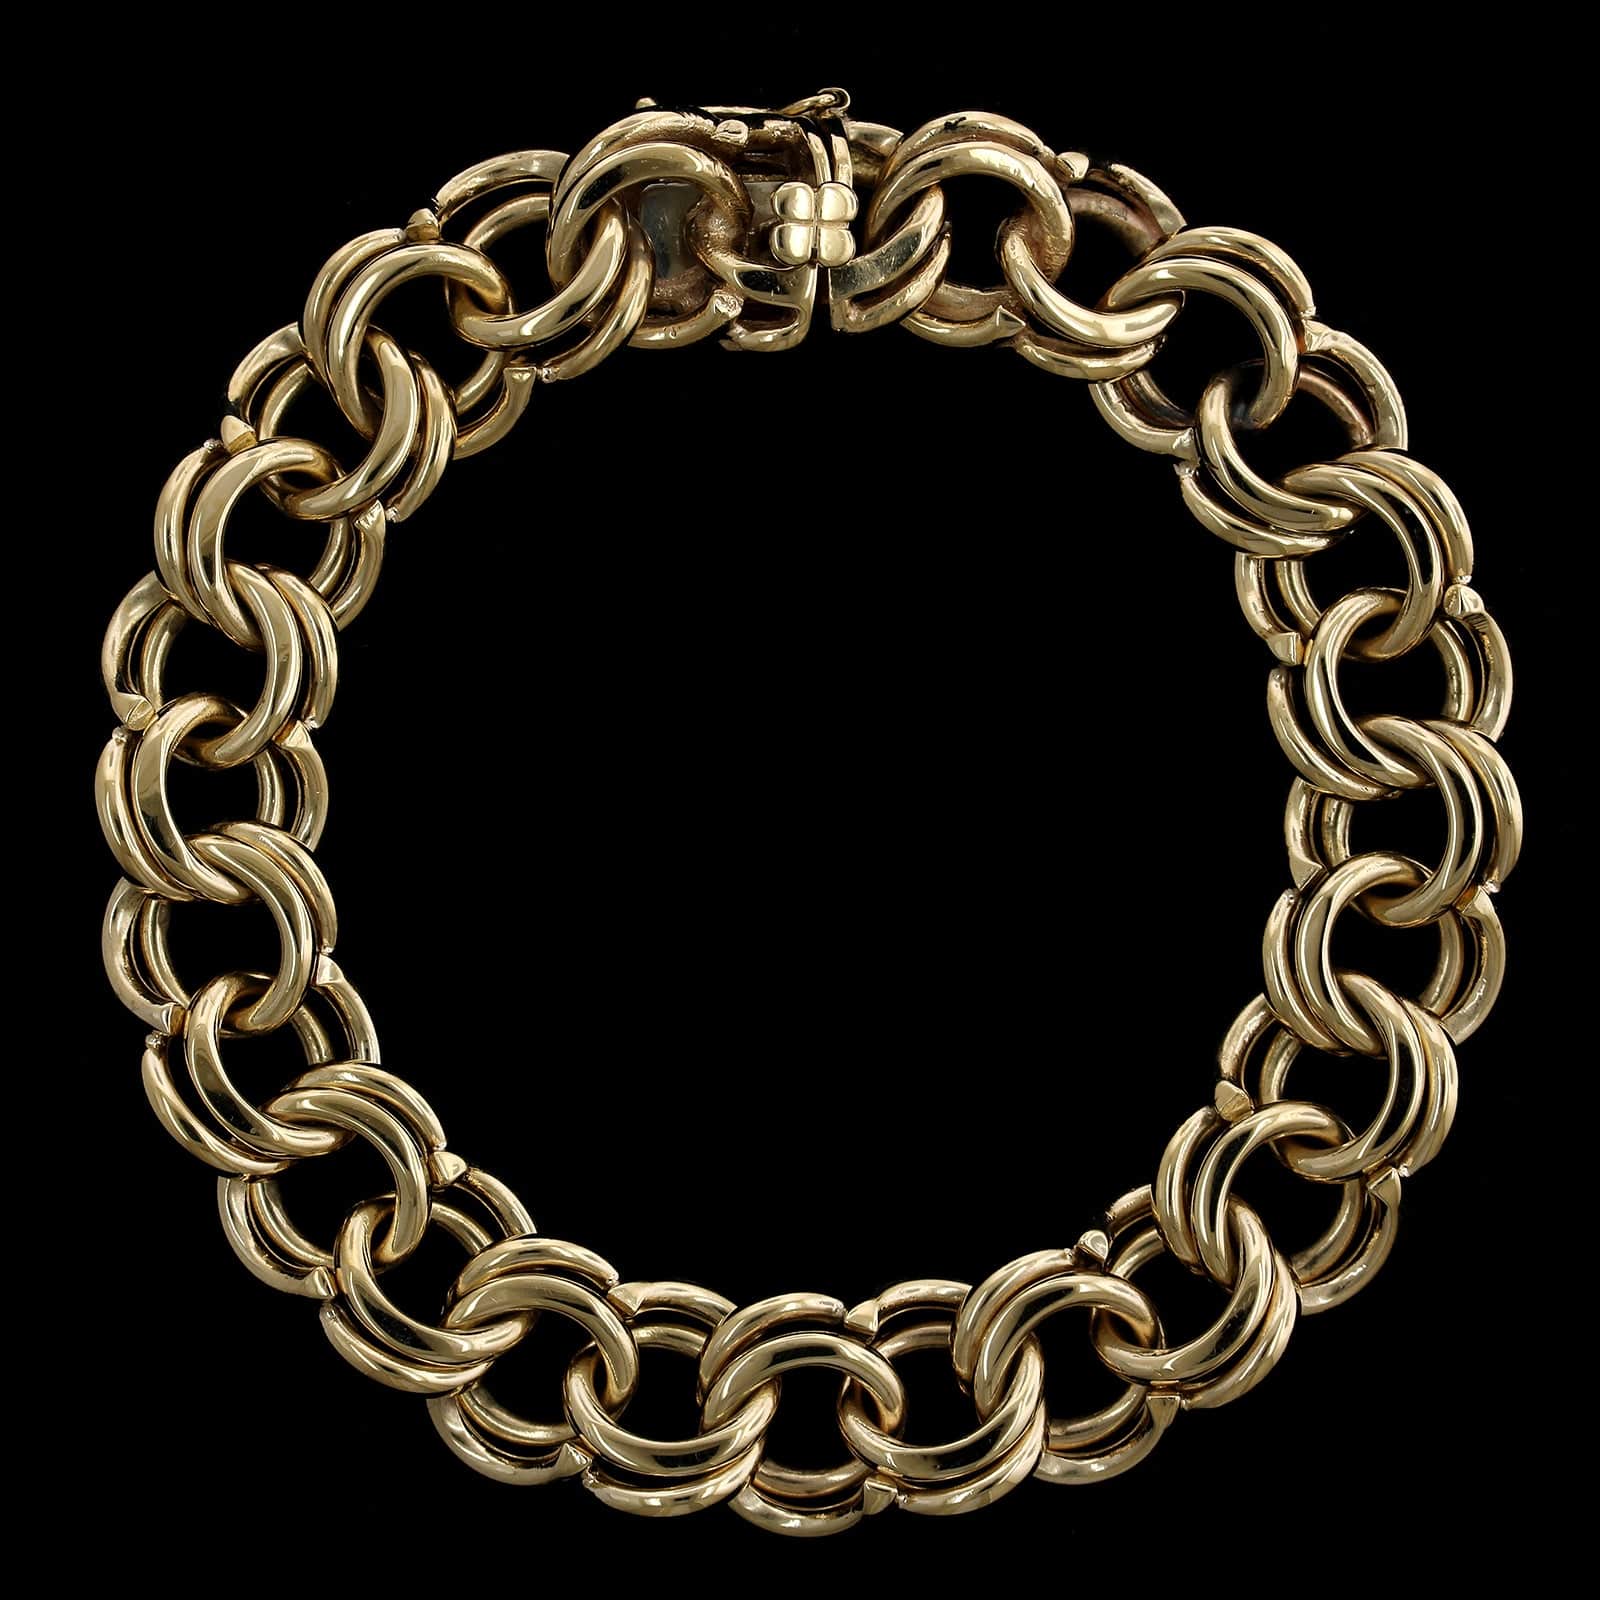 14K Yellow Gold Double Link Charm Bracelet